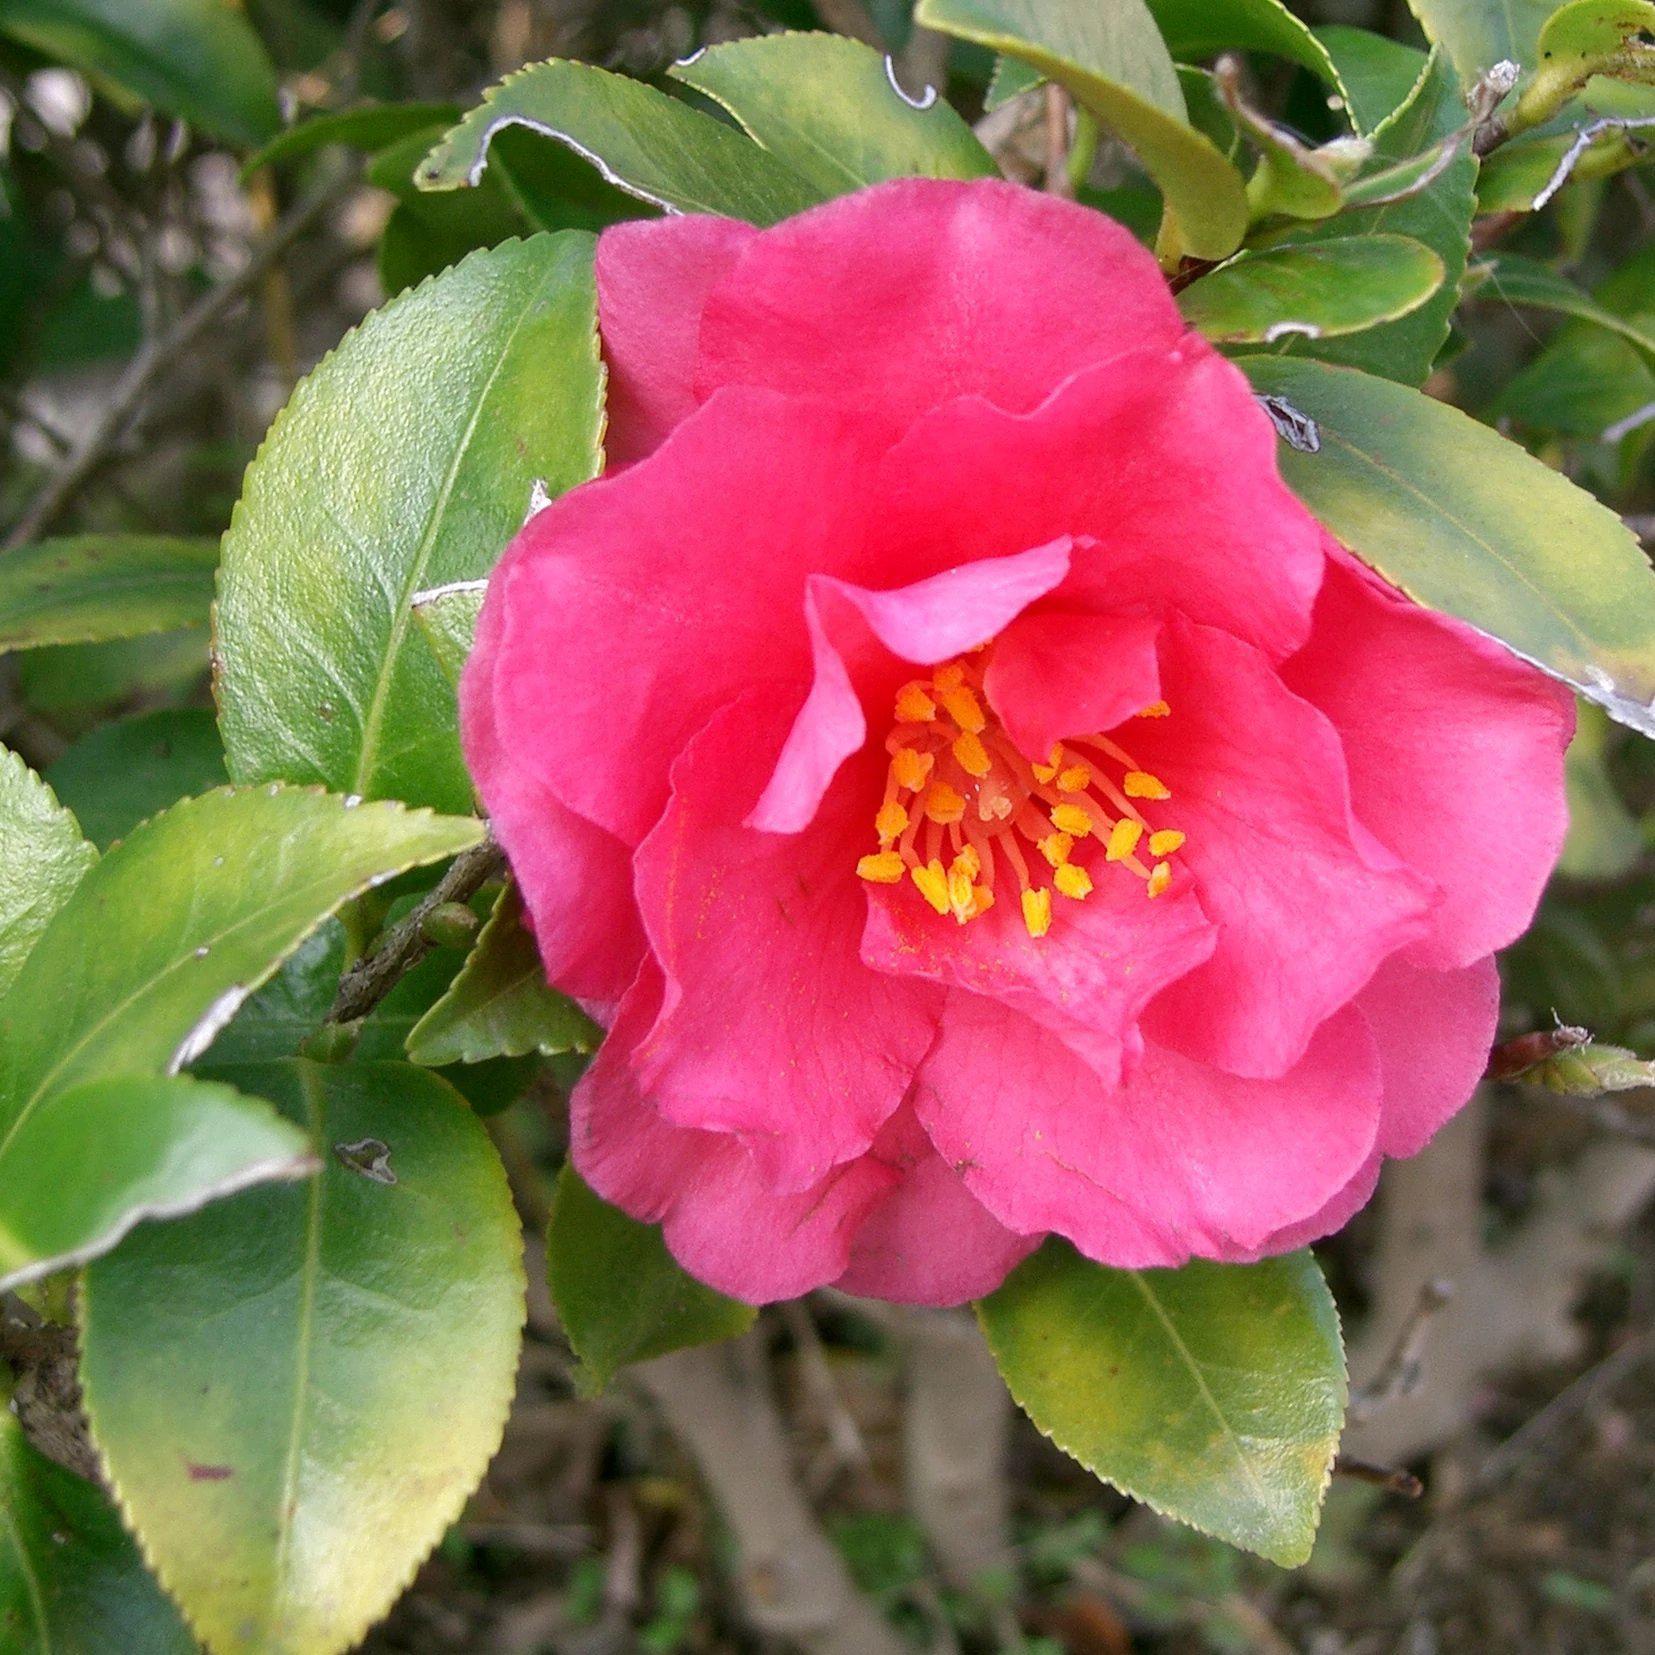 Image of Shi shi camellia and astilbe companion plants